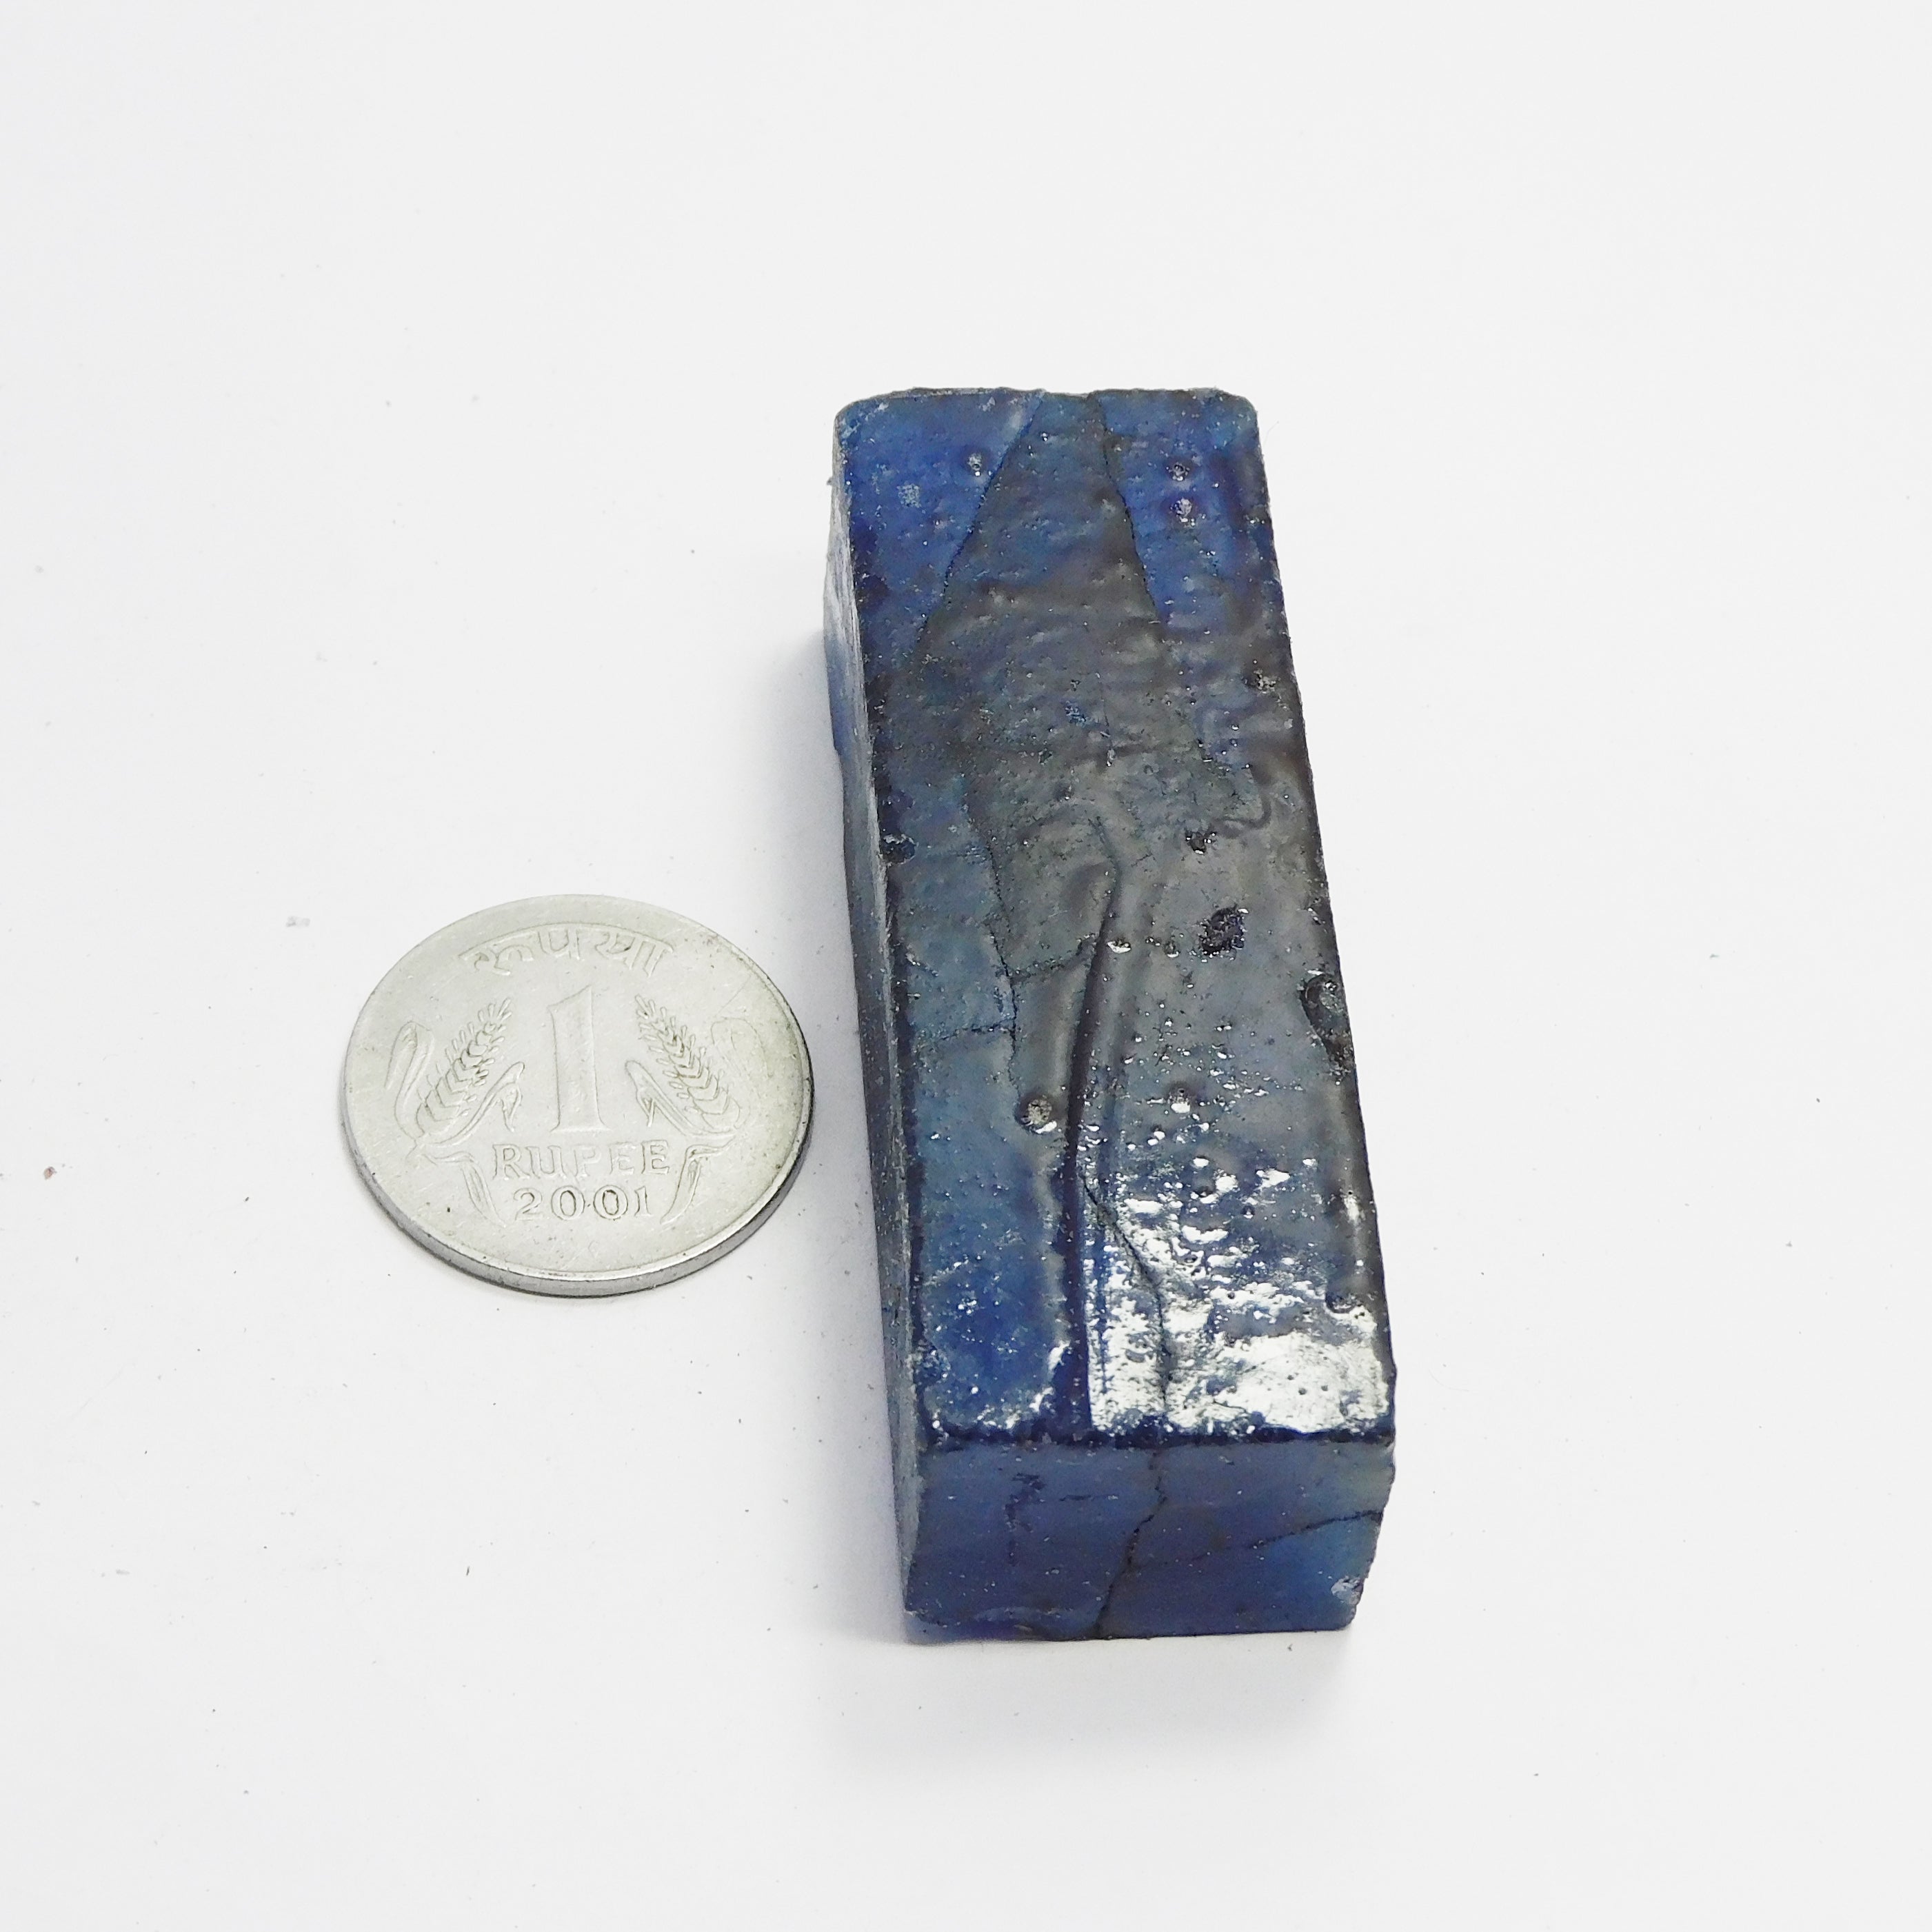 SAPPHIRE- Jwelery / Earrings 382.40 Carat Uncut Raw Rough Natural Blue Tanzanite Rough CERTIFIED Loose Gemstone